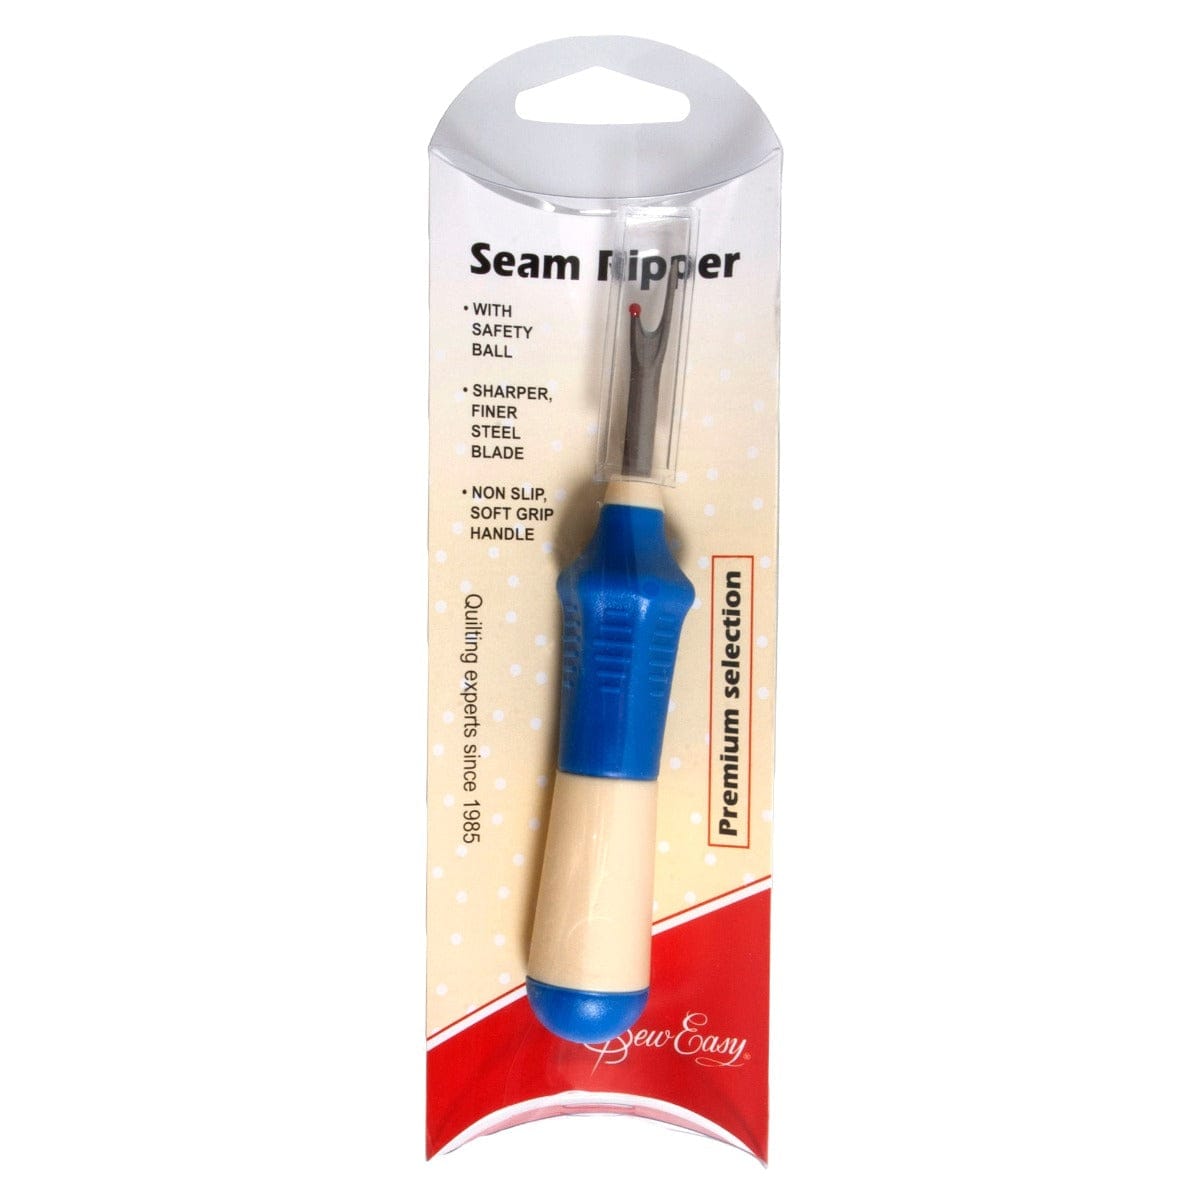 Sew Easy Seam Ripper: Soft Grip Handle